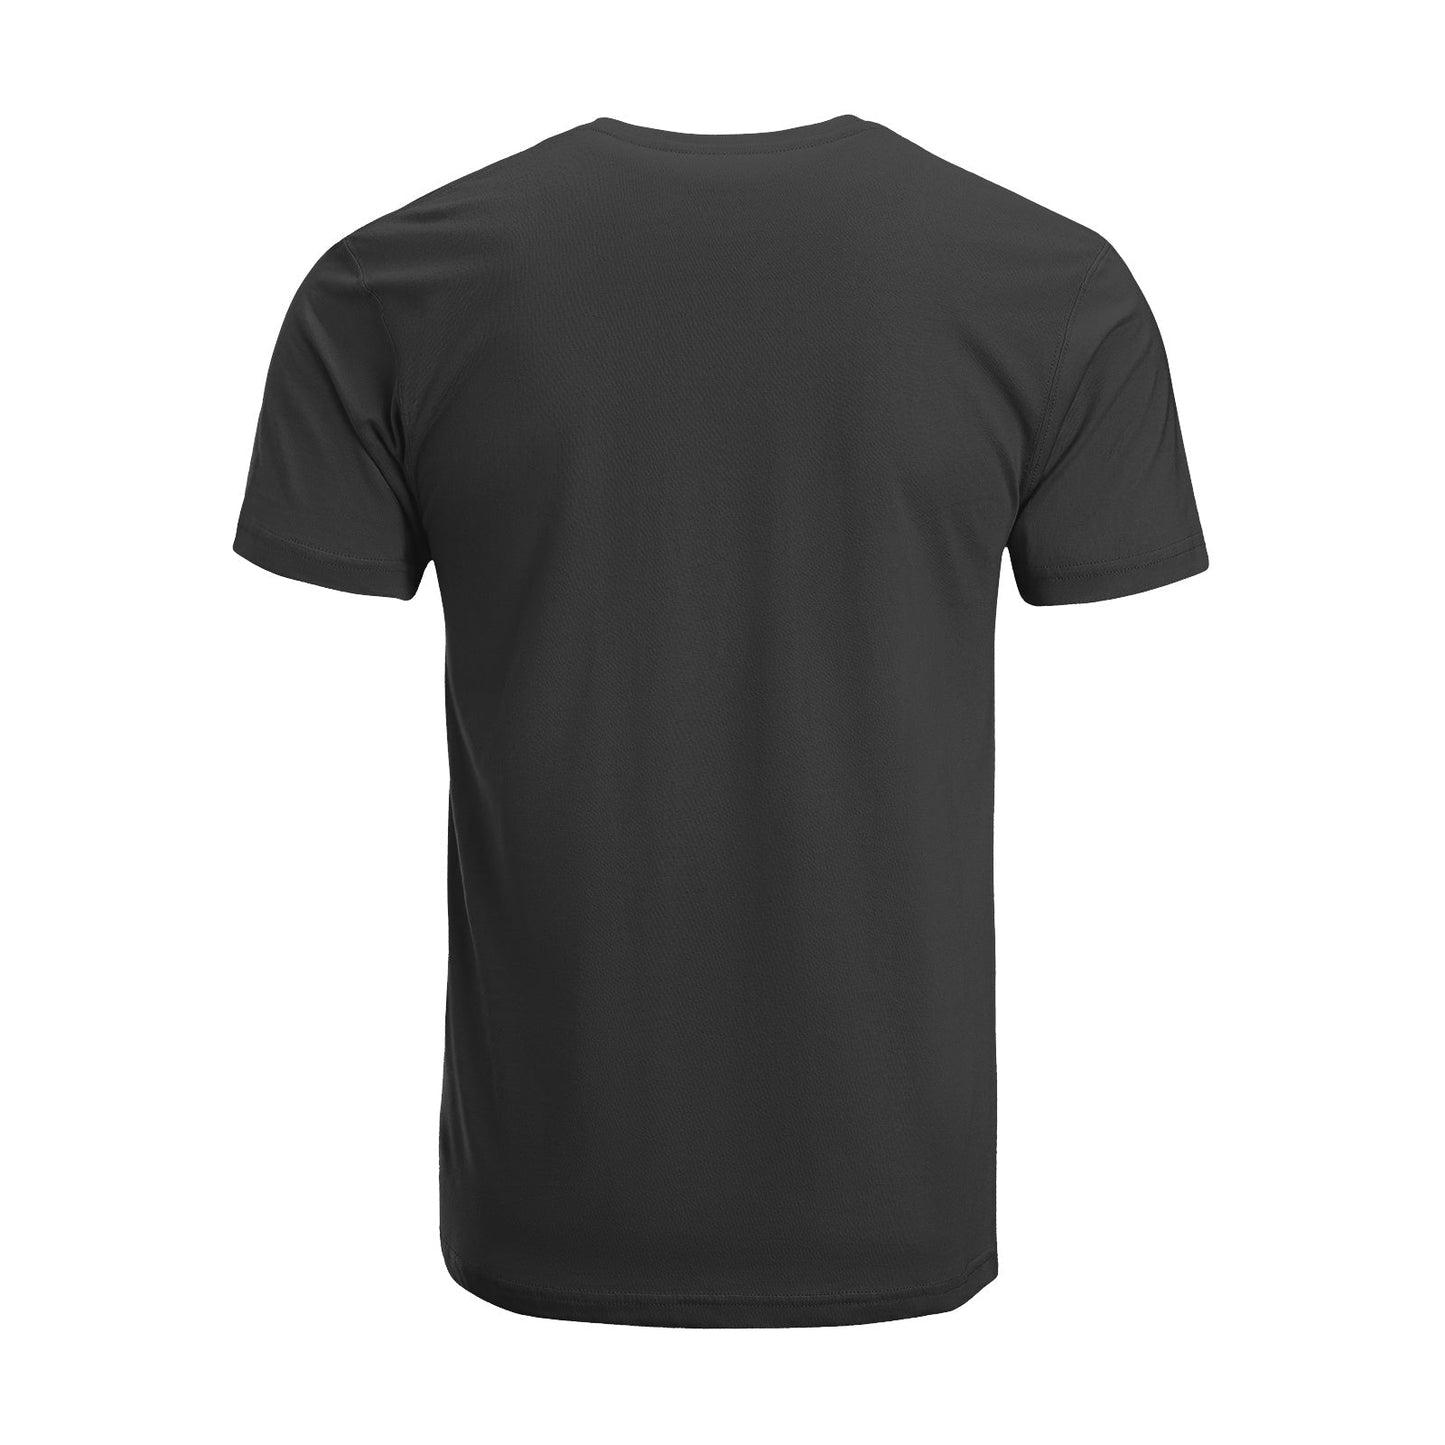 Unisex Short Sleeve Crew Neck Cotton Jersey T-Shirt USA 13